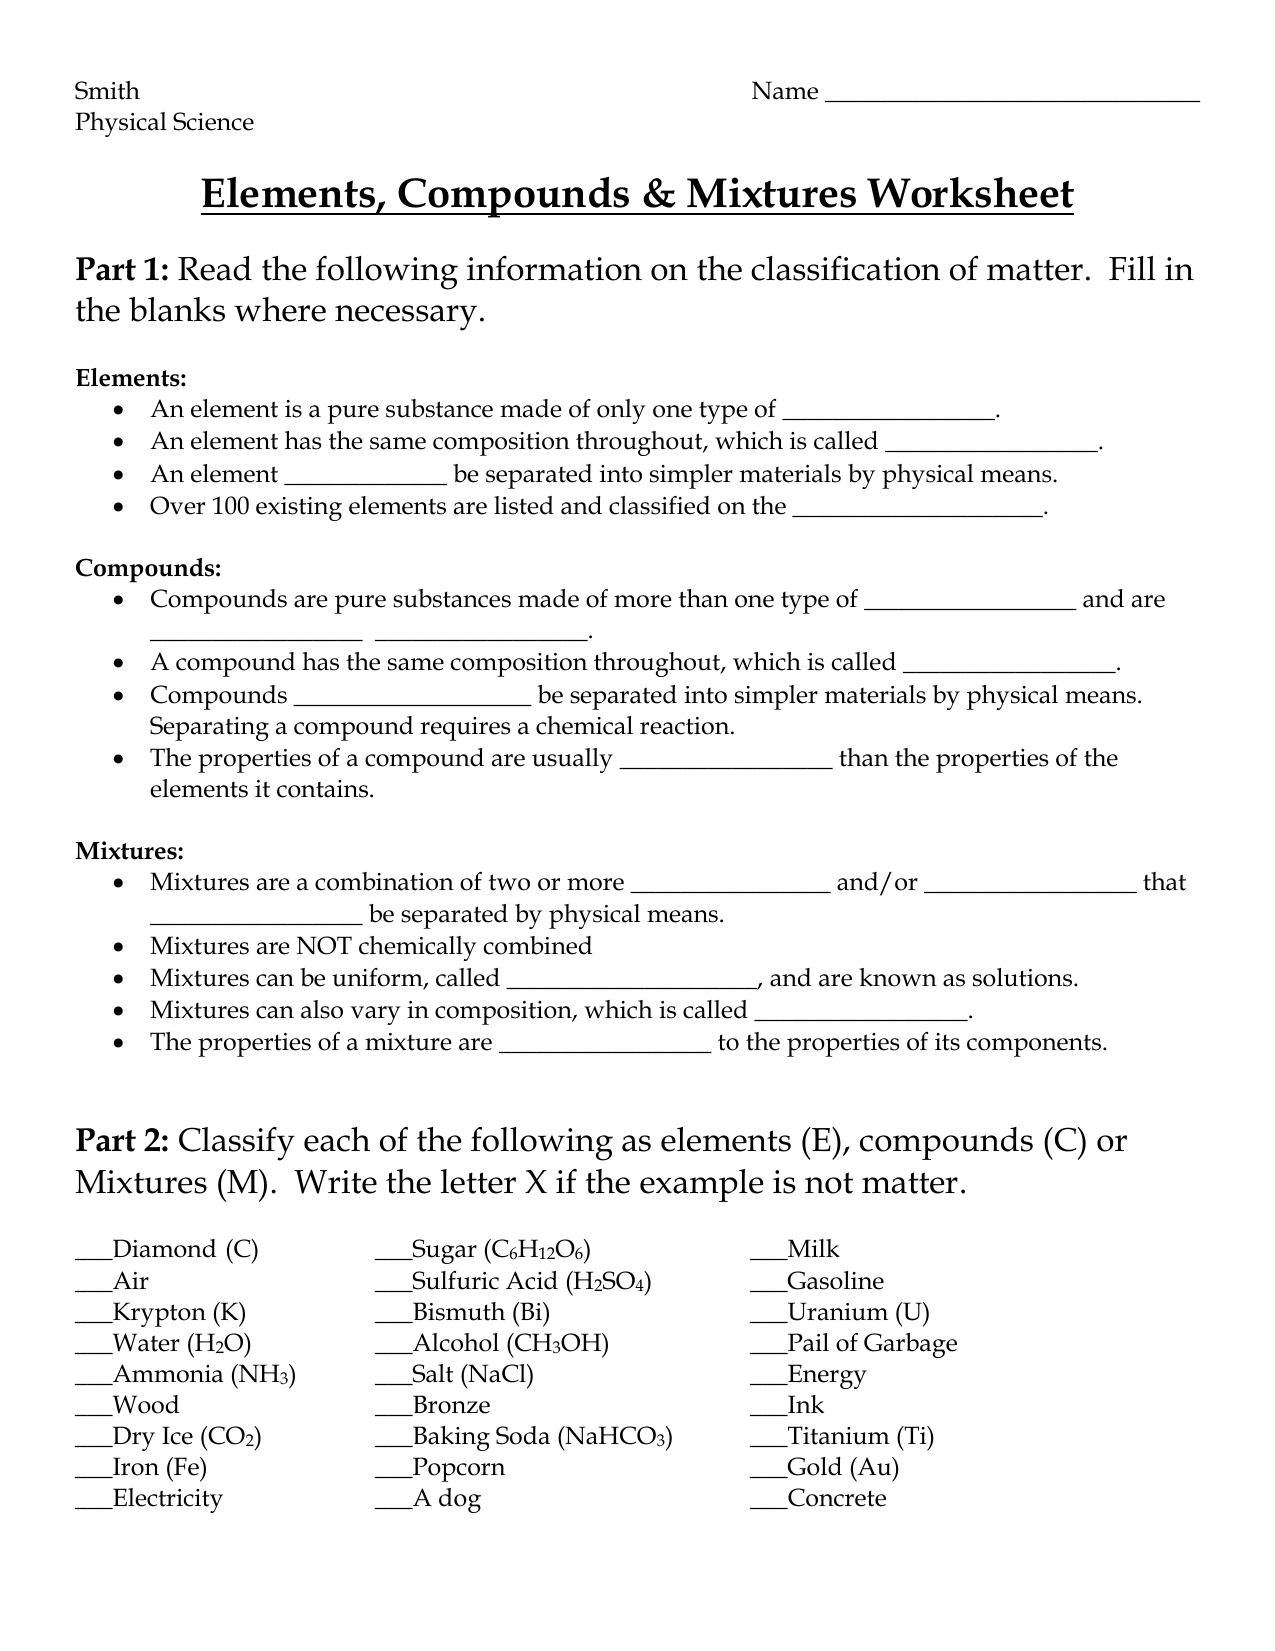 Elements Compounds Mixtures Worksheet